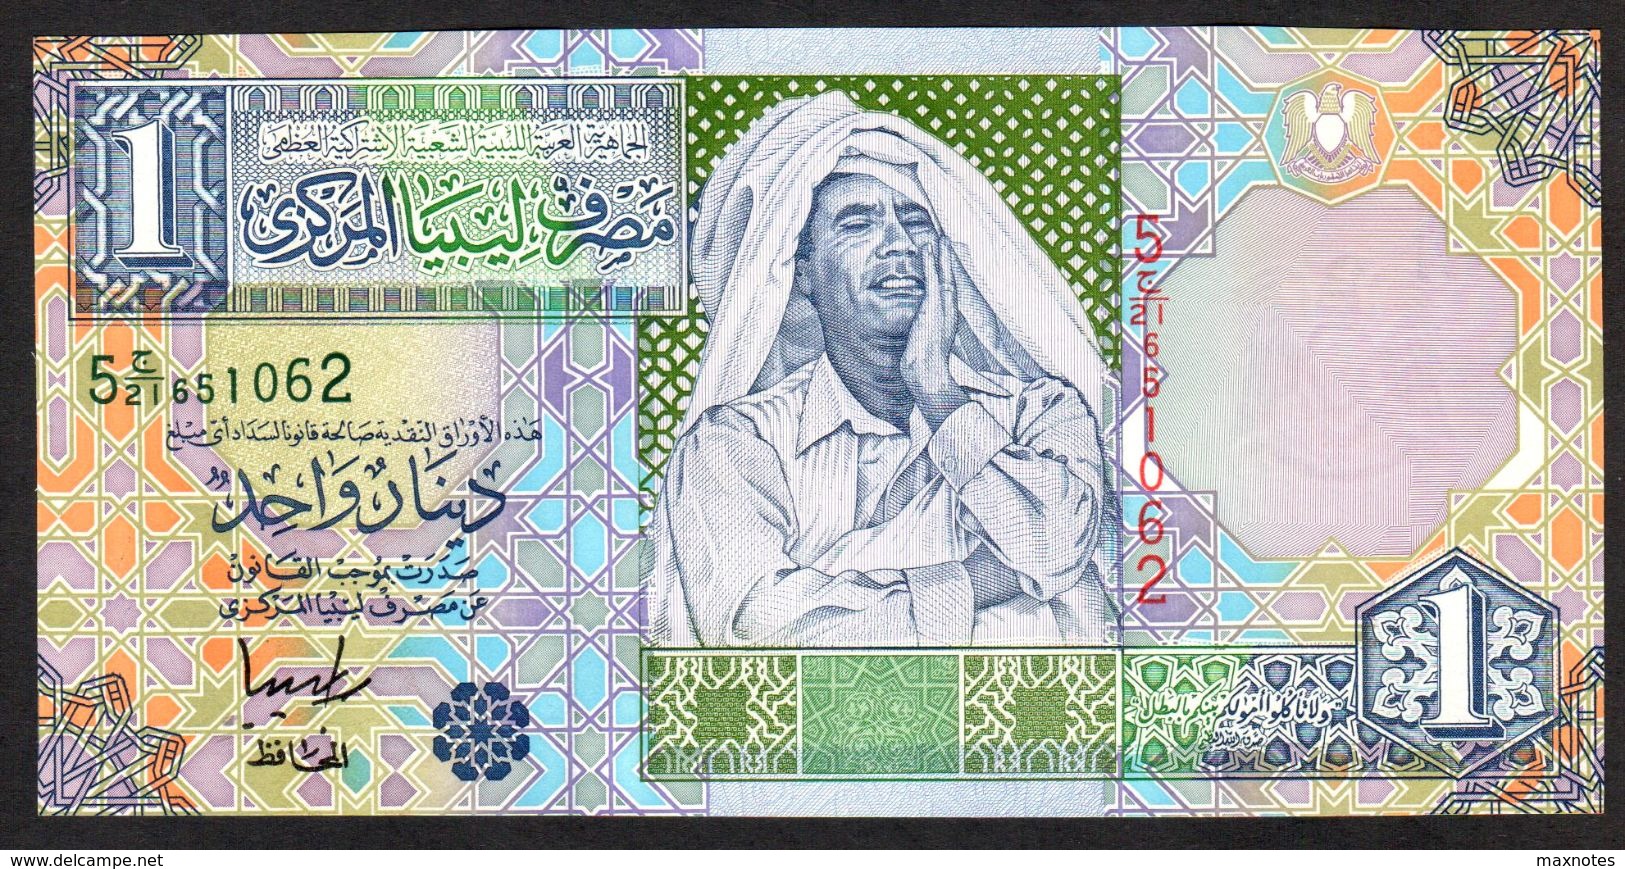 LIBIA (LIBYA) : Banconota 1 Dinaro - 2002 - P64b – UNC - Libia